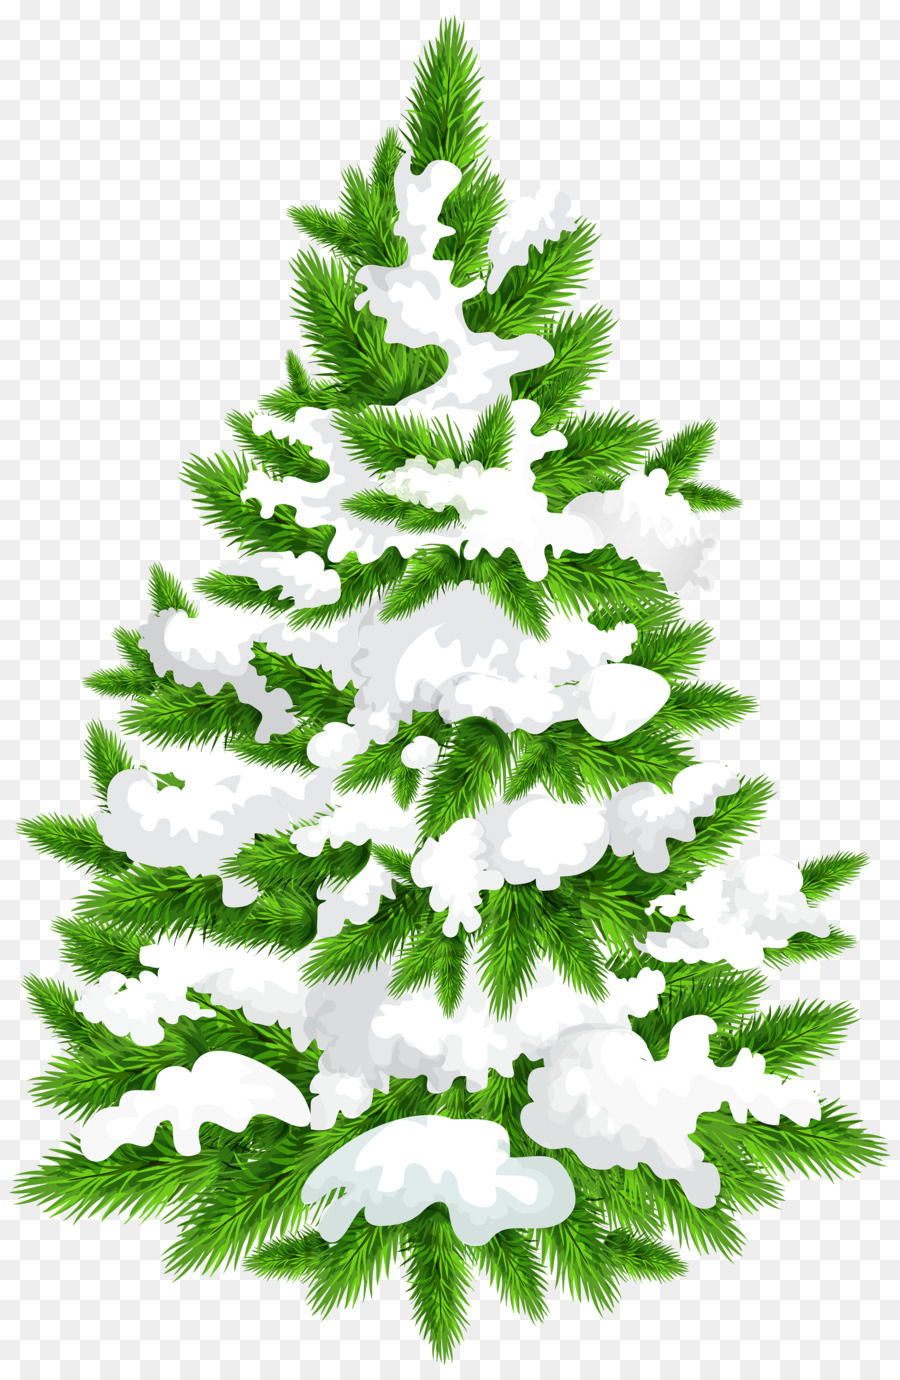 cemara pohon salju gambar png cemara pohon salju gambar png